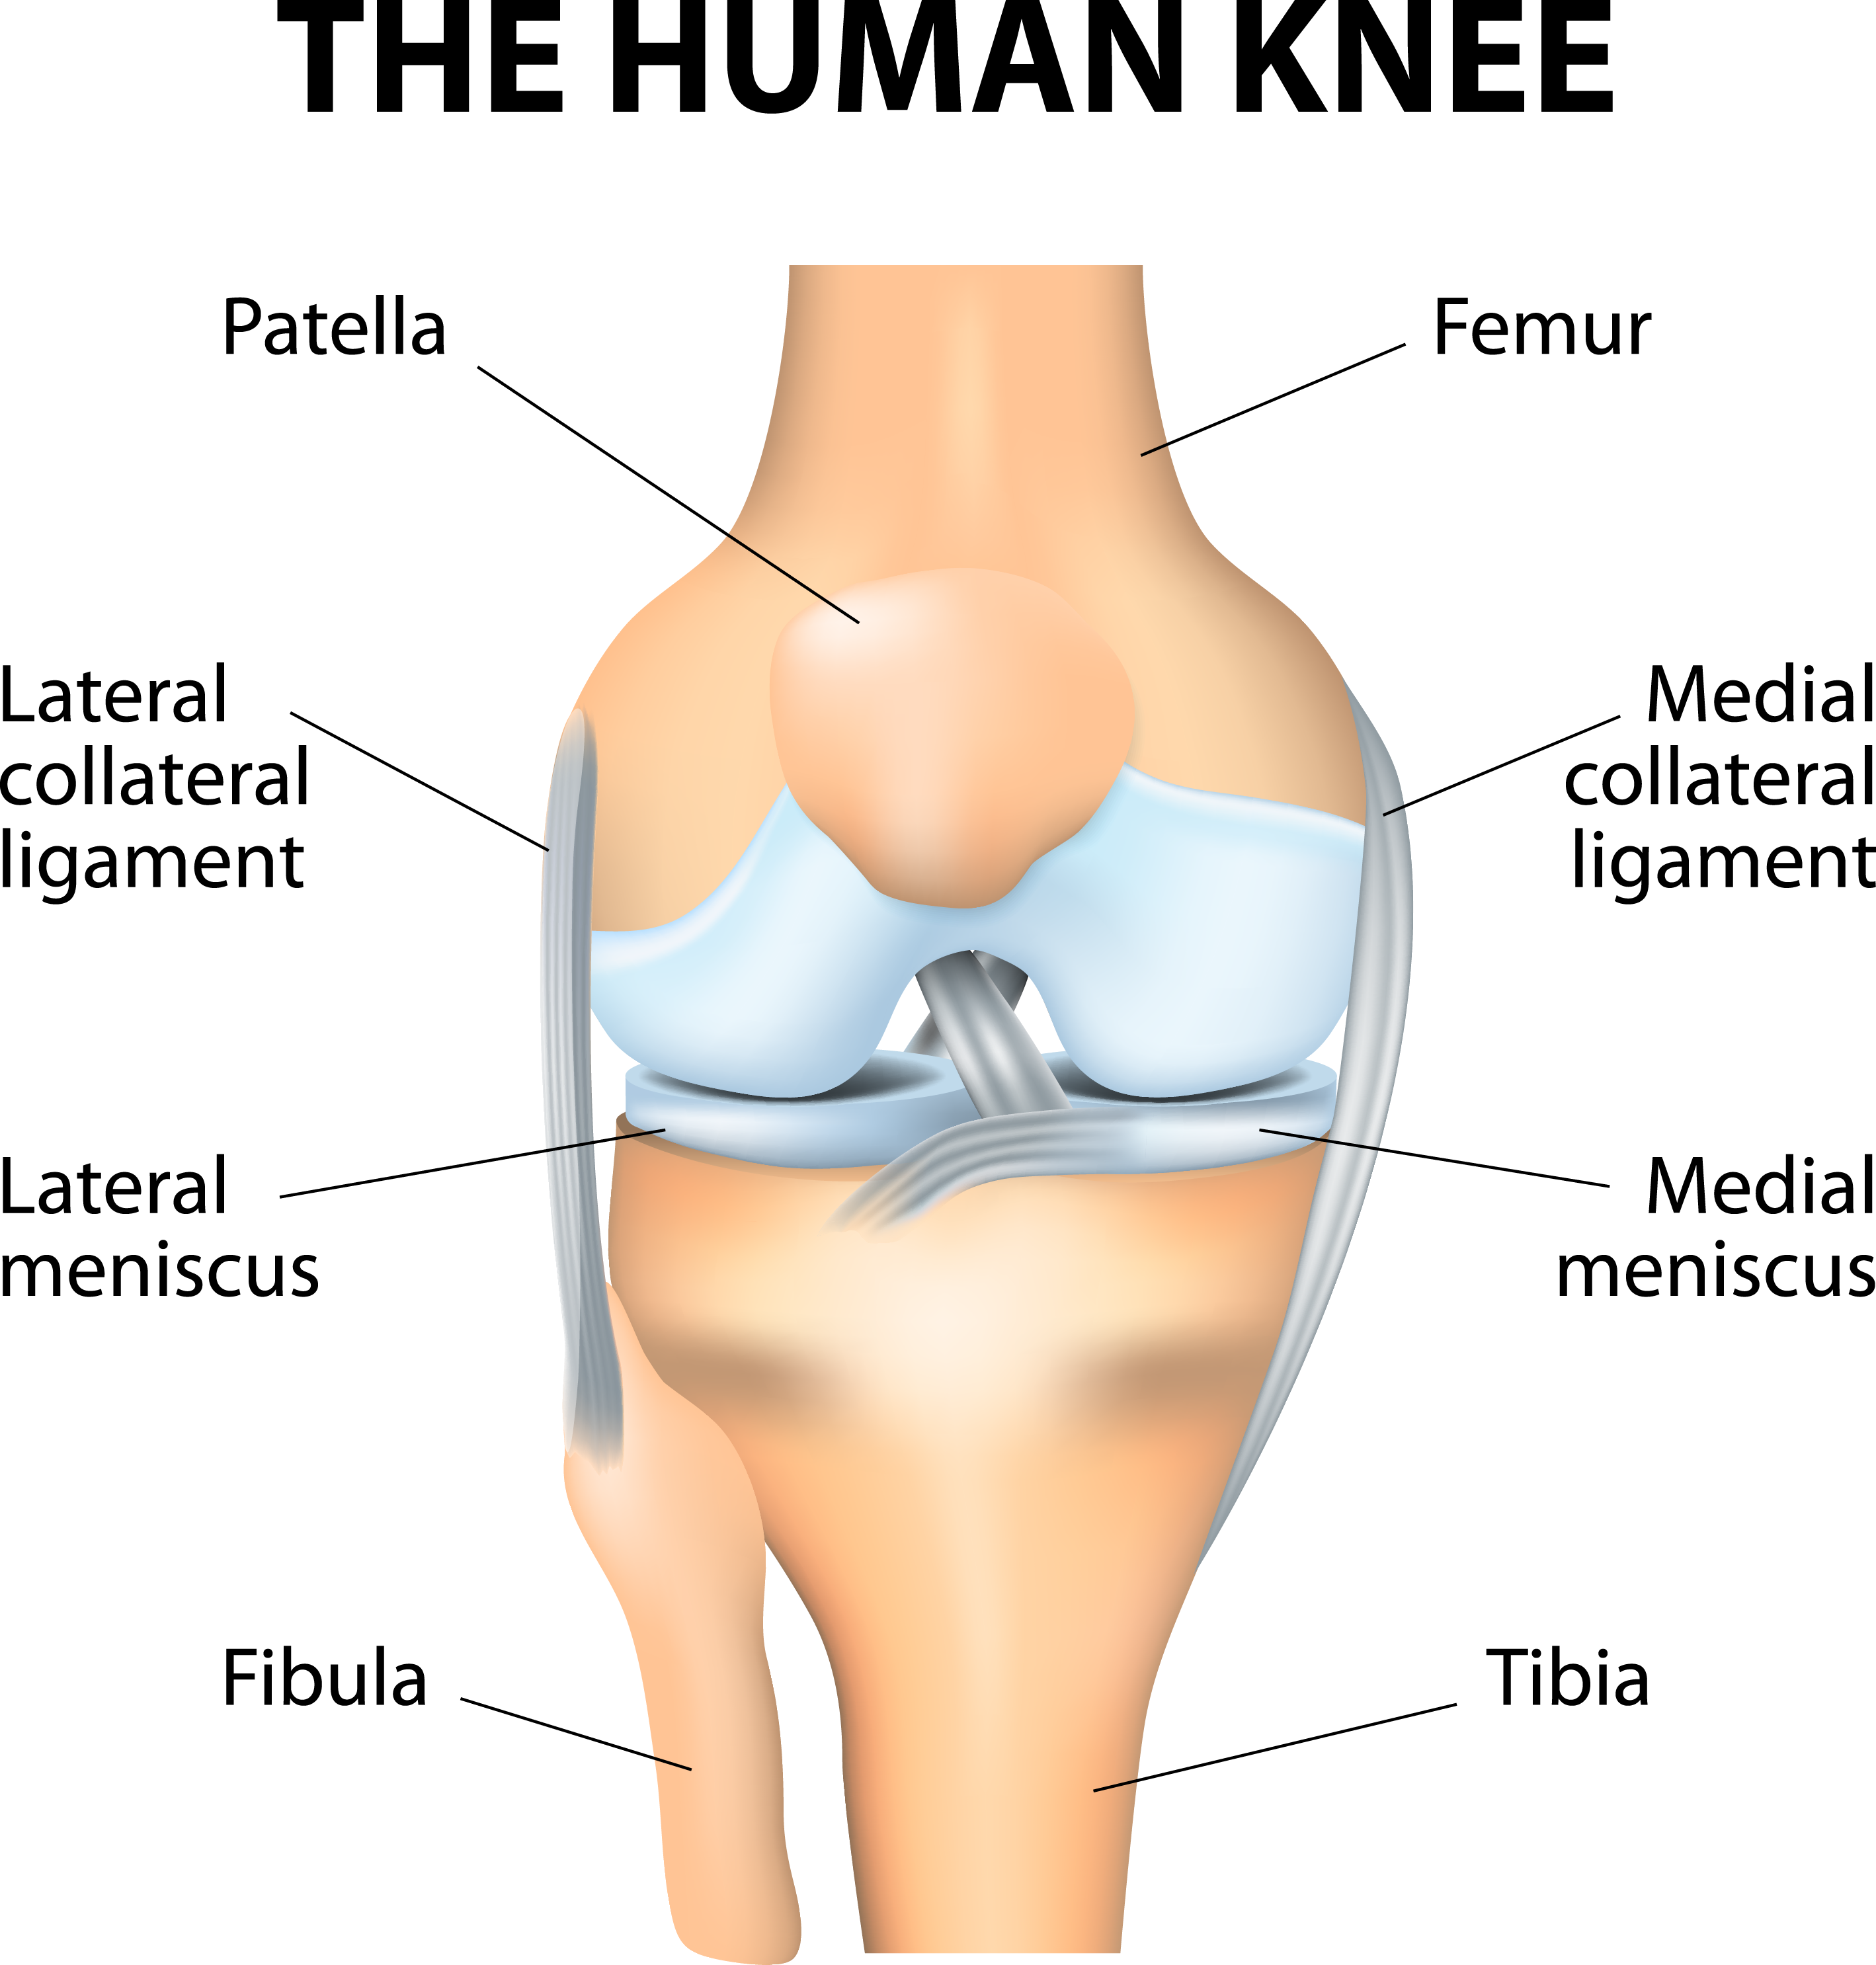 The Human knee